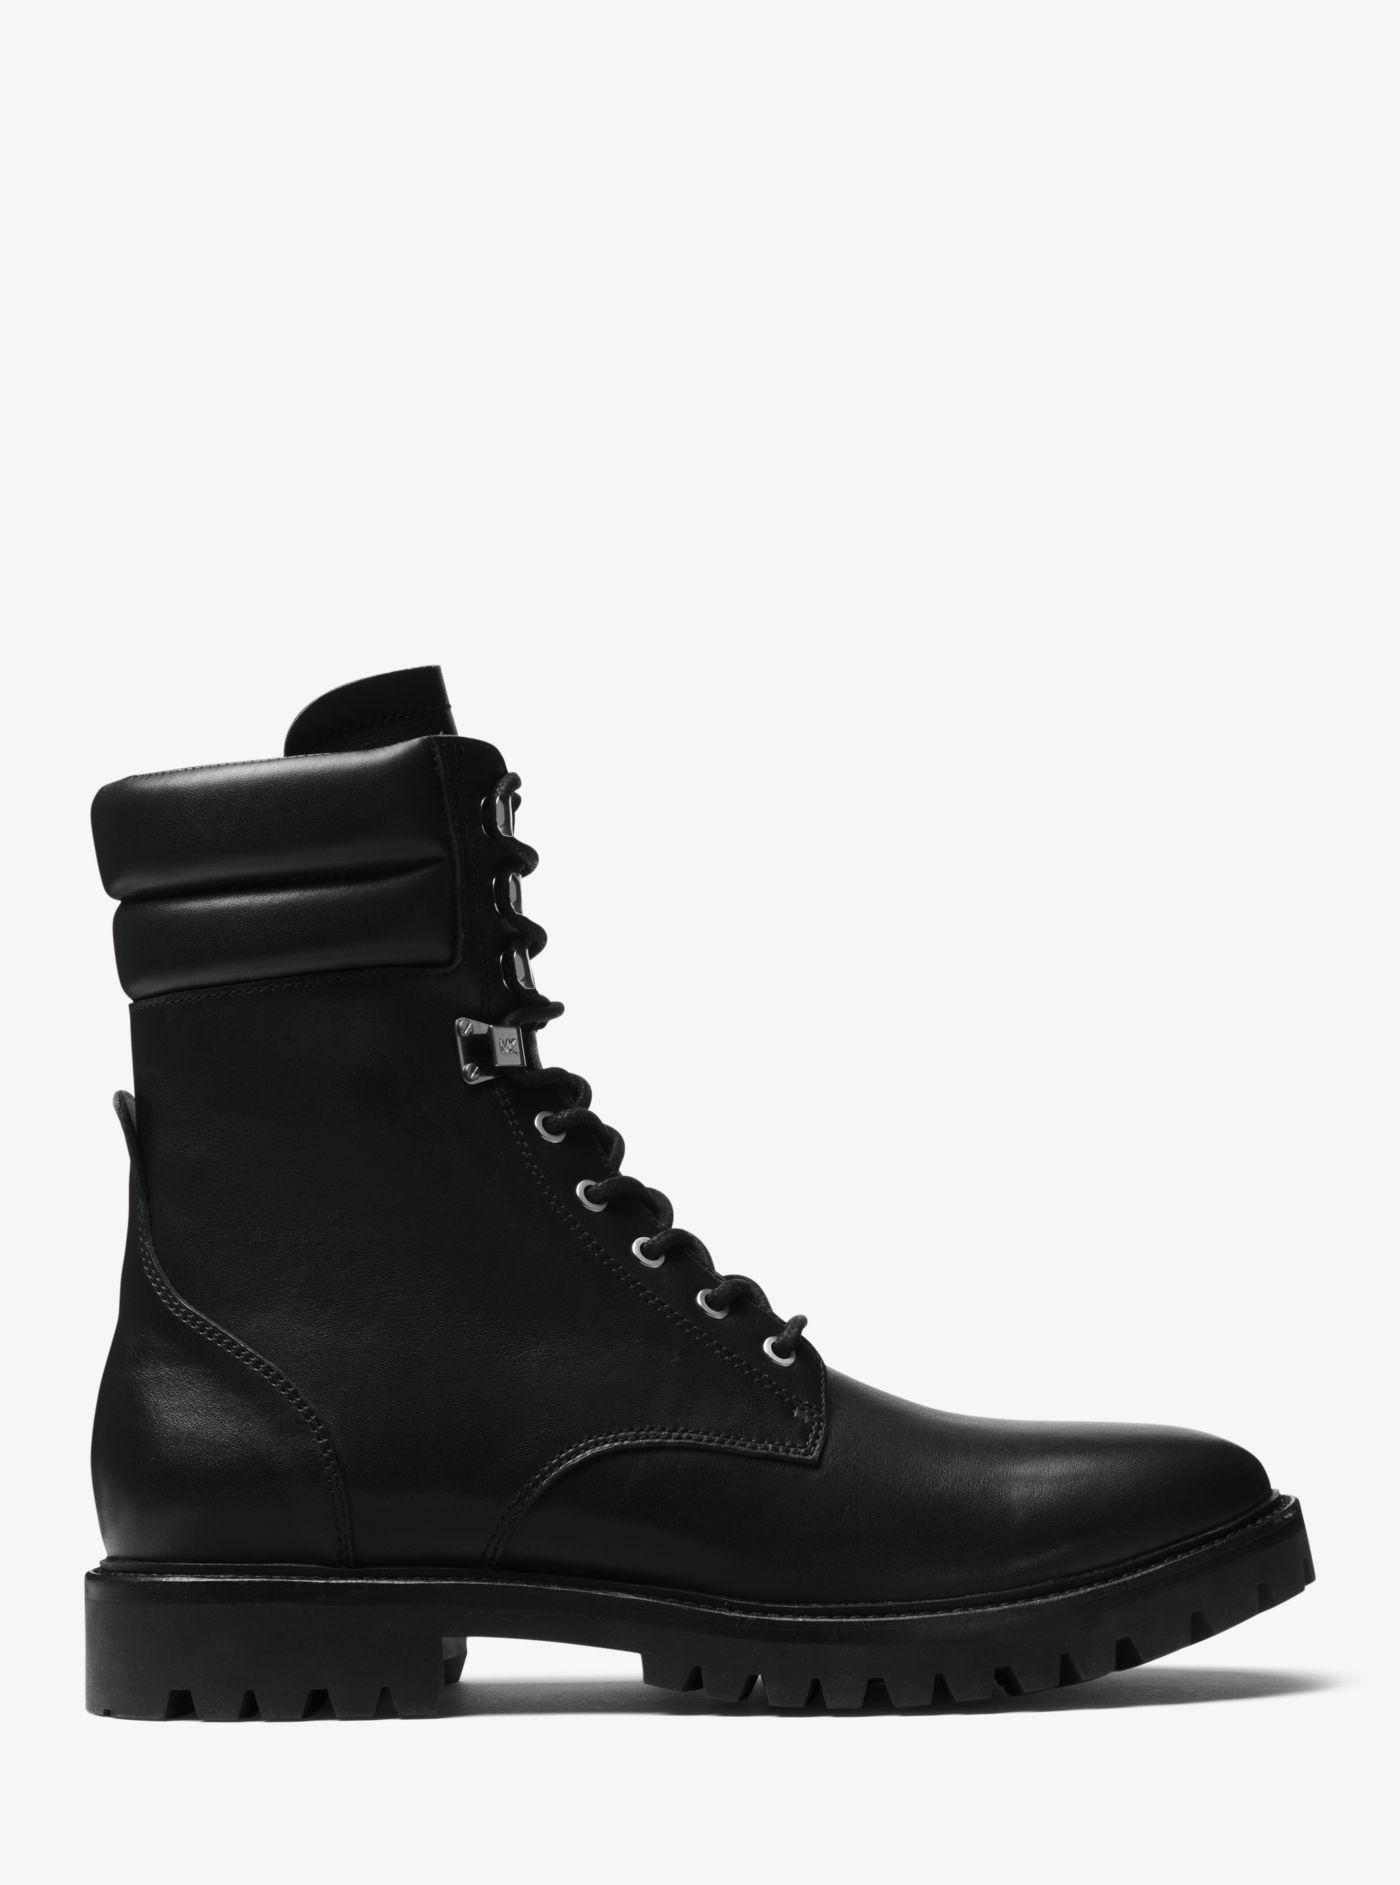 Michael Kors Wilder Leather Combat Boot in Black for Men - Lyst